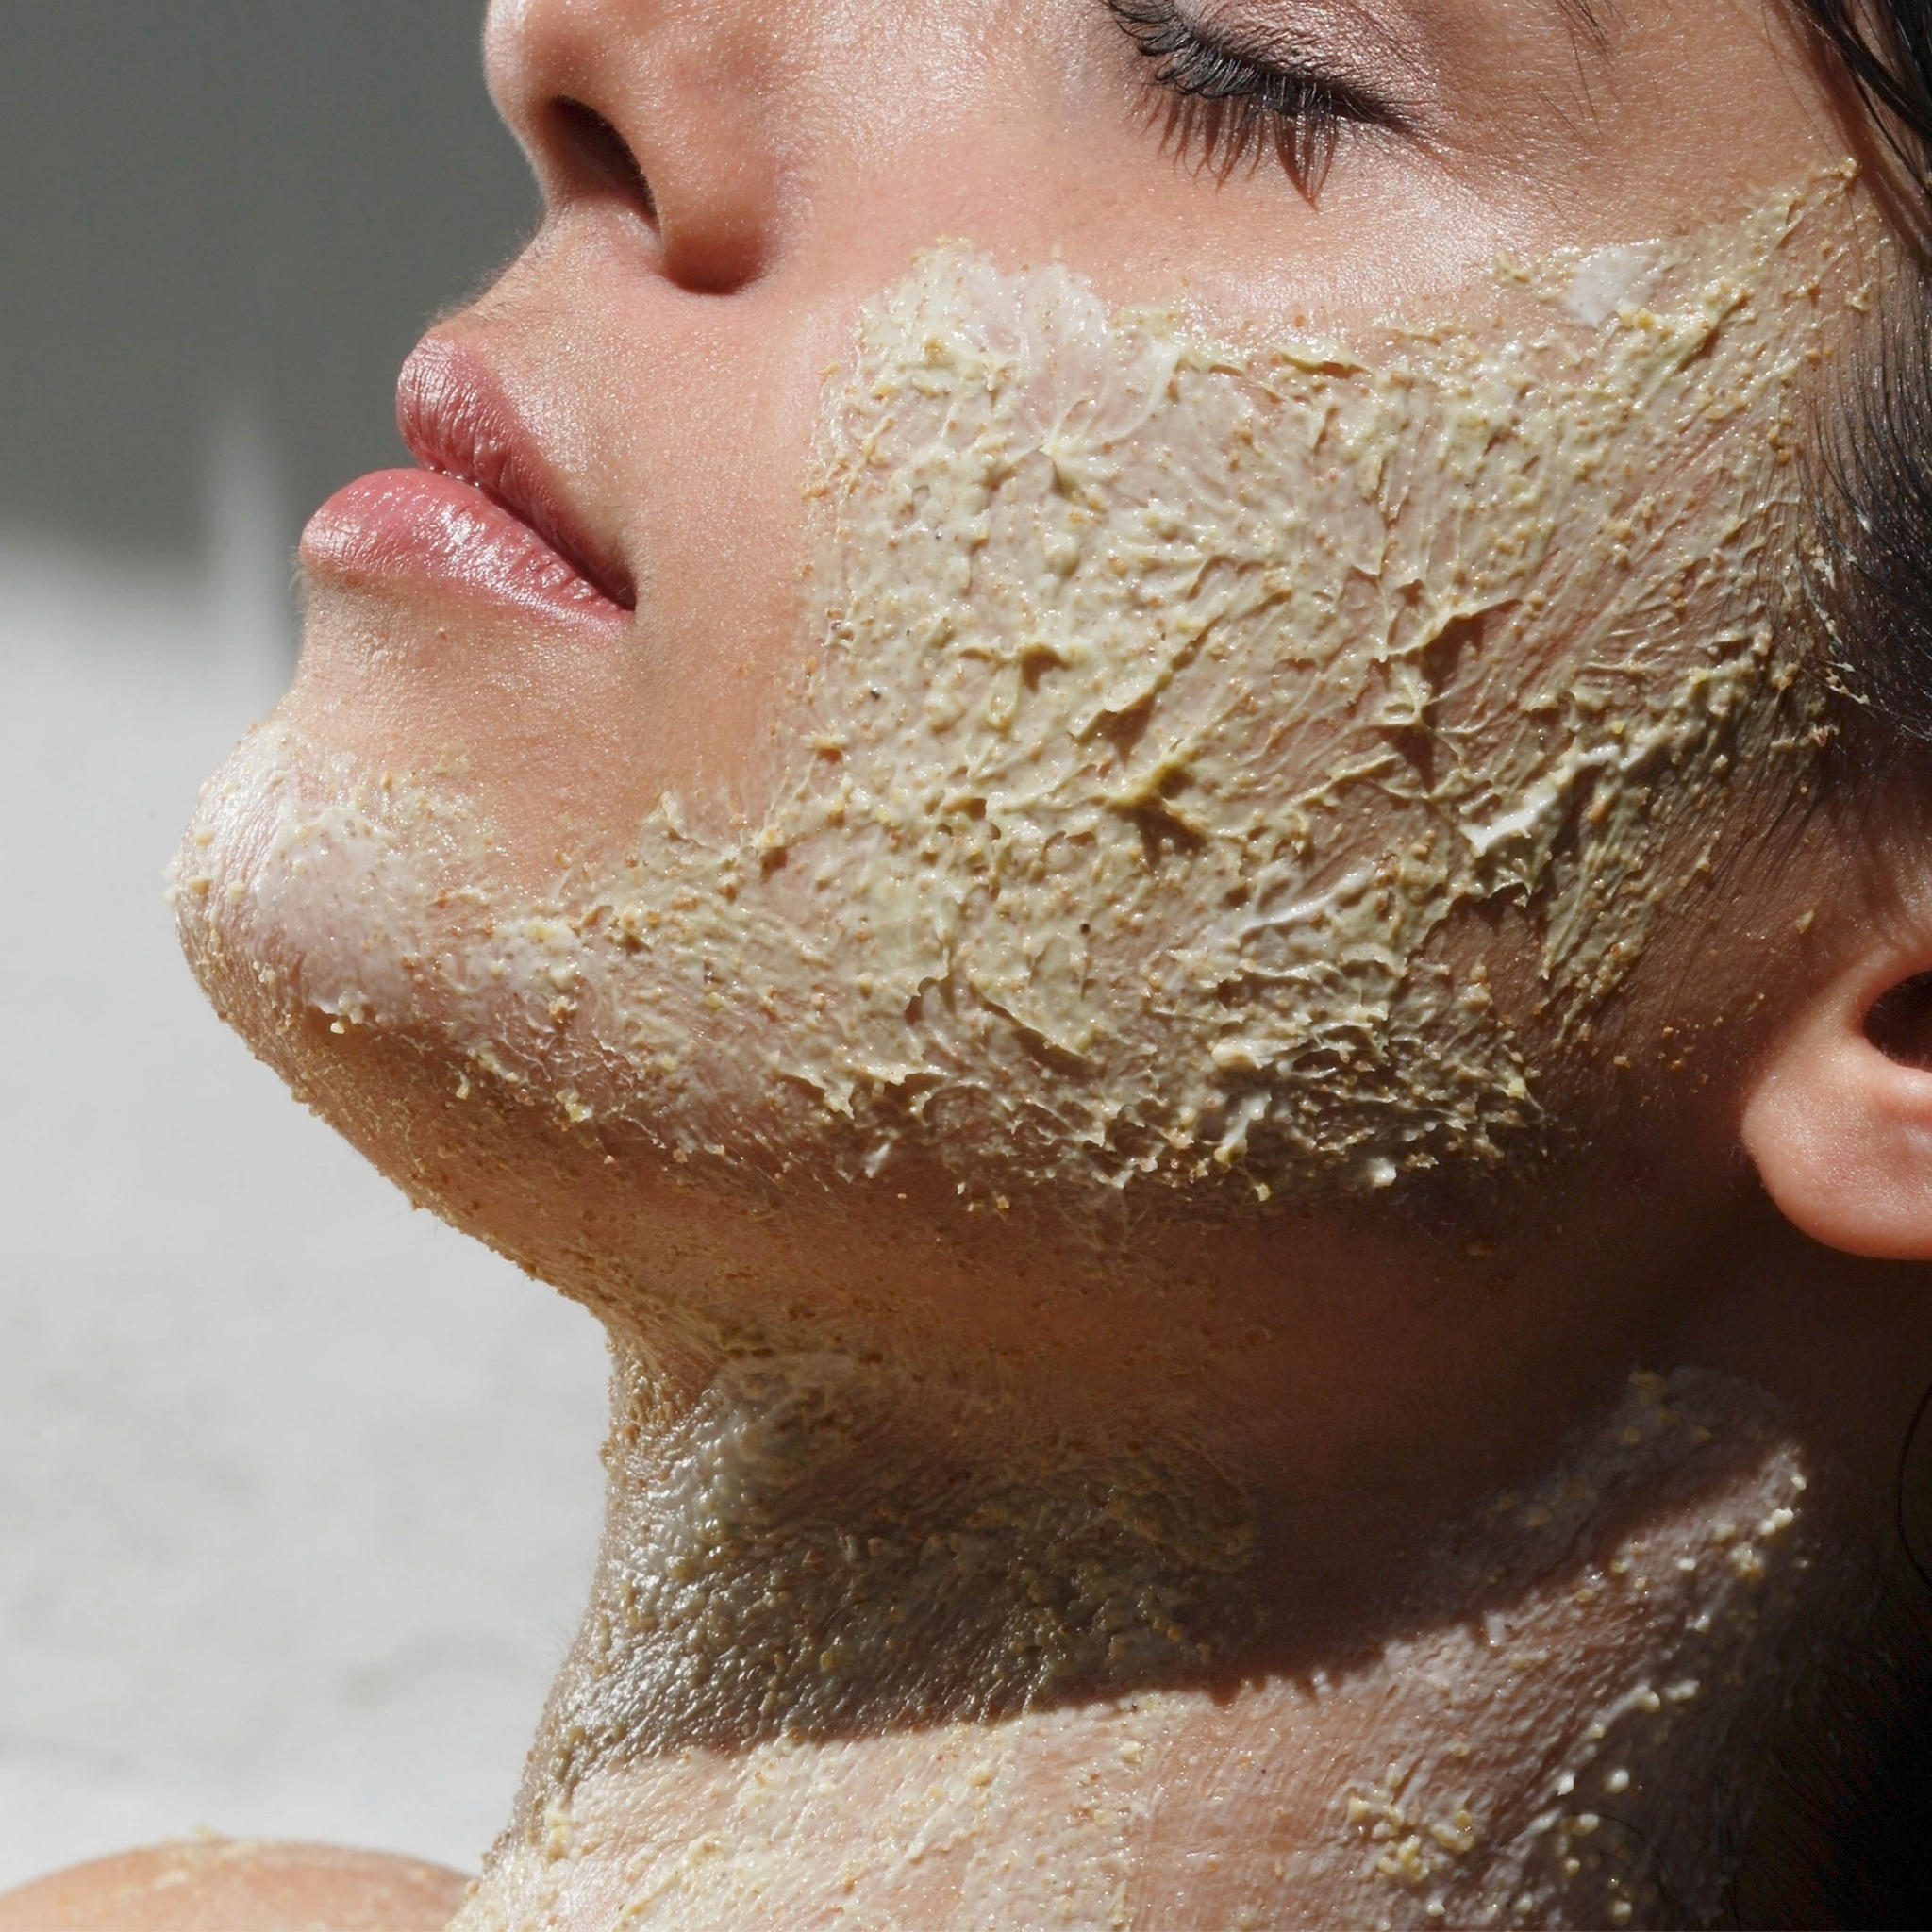 Pore Refining Pumpkin Mask RAOOF MD Dermatology cream on woman face